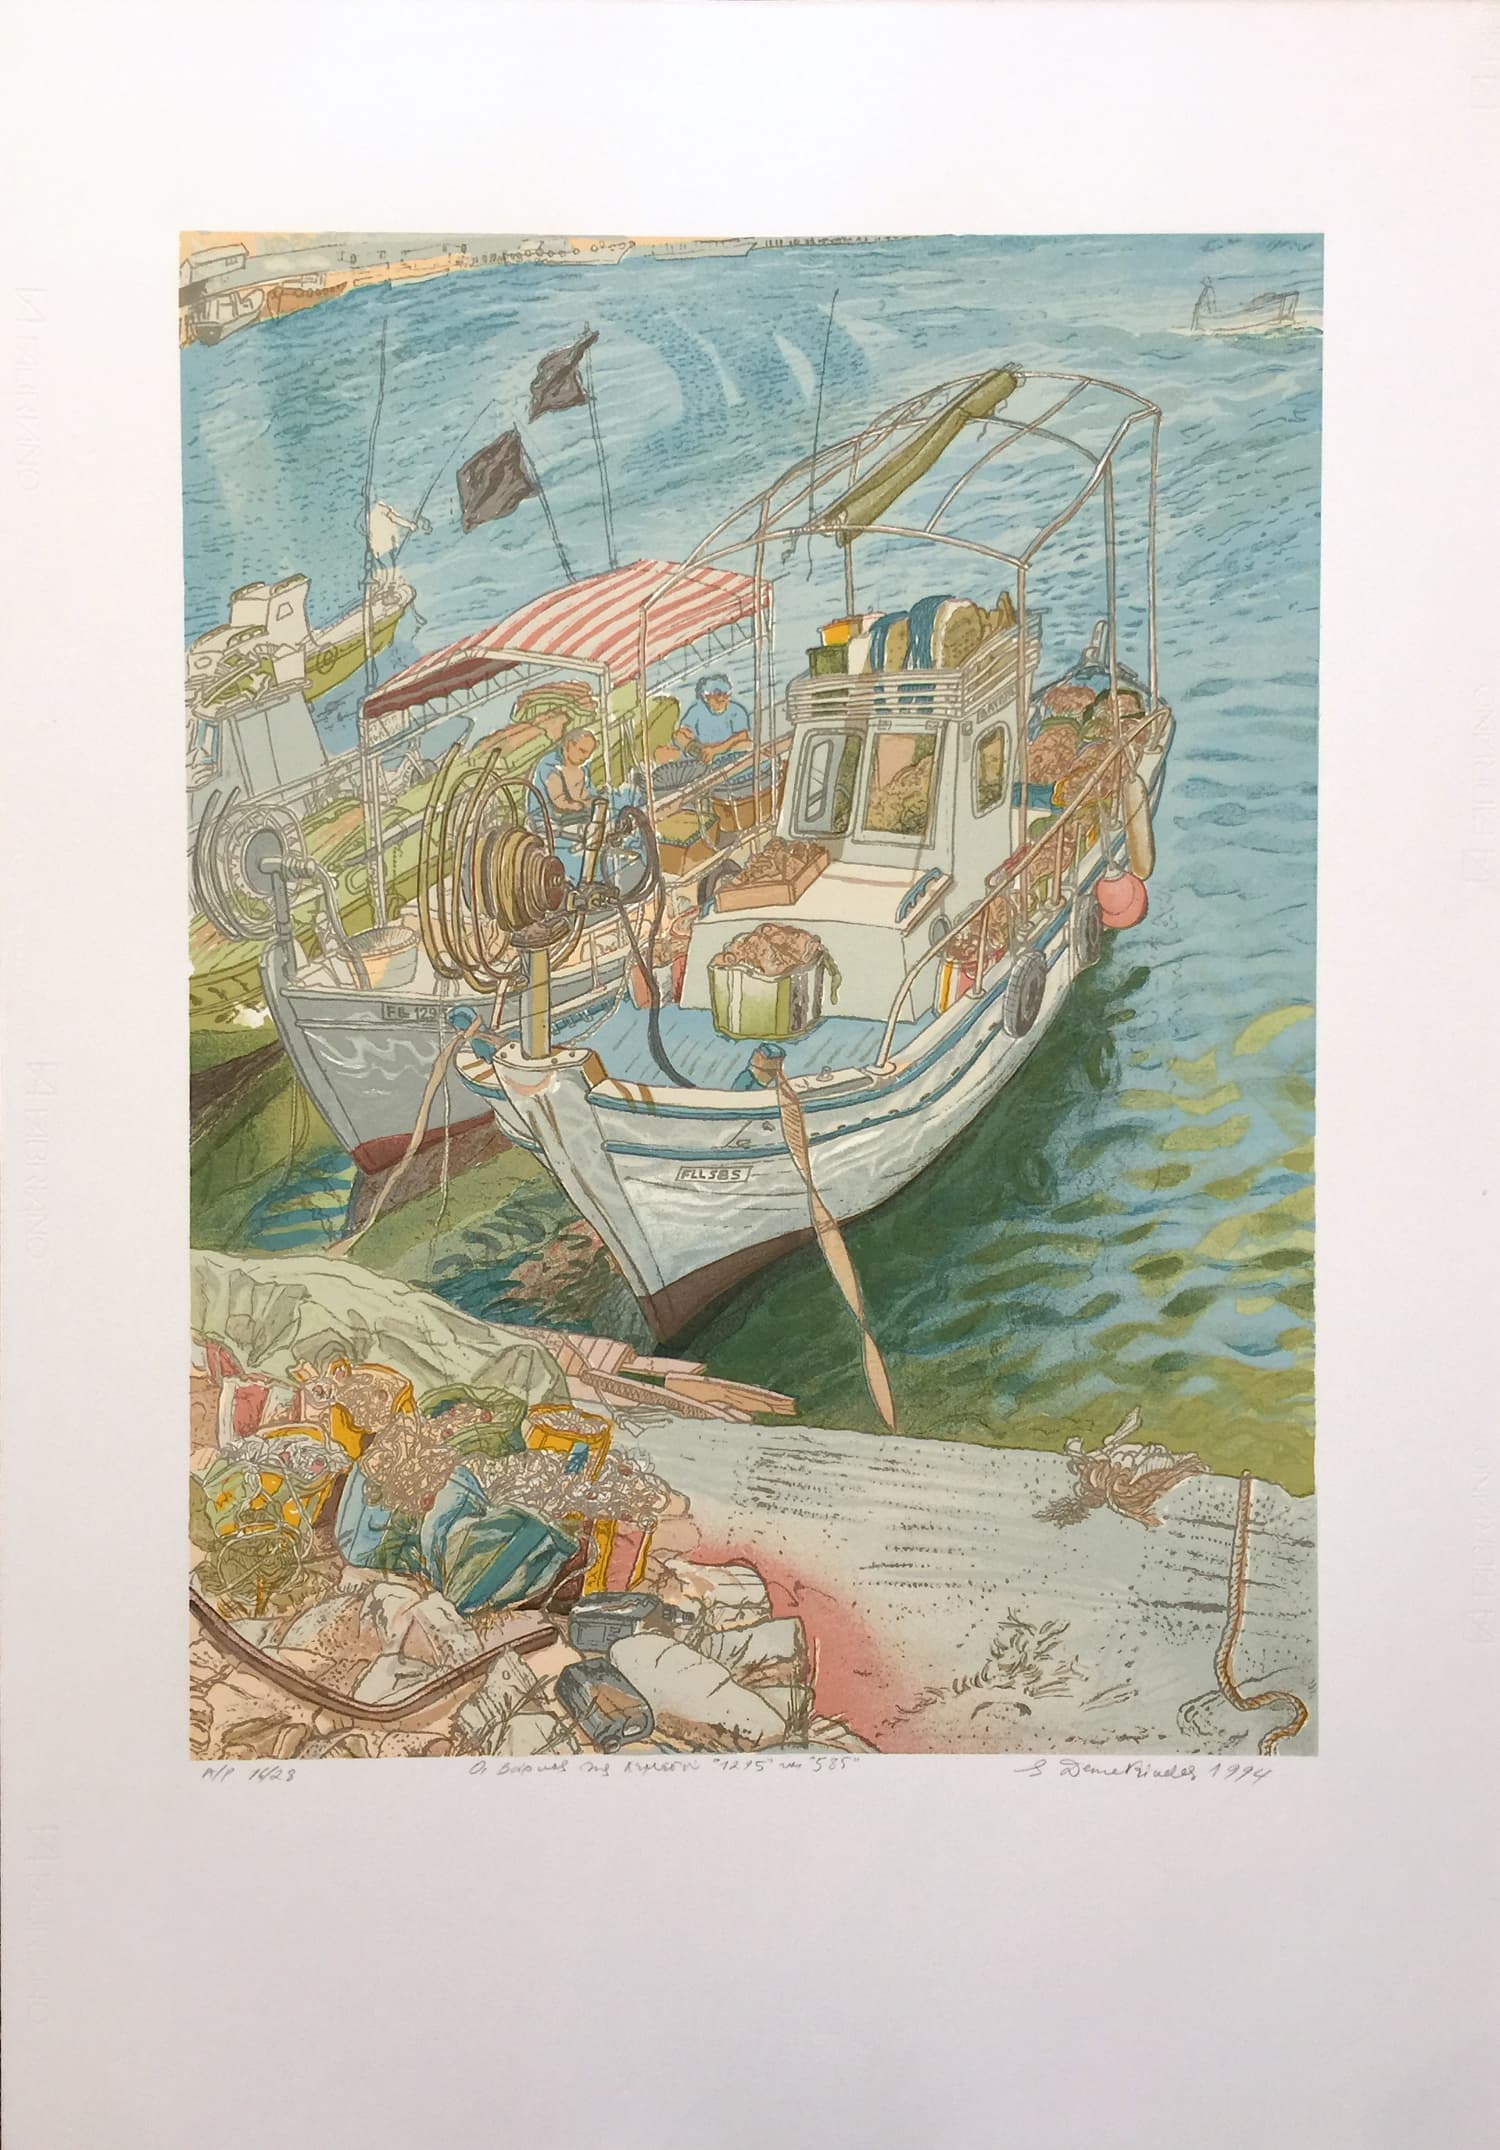 Demetriades Spyros, The boats of Limassol 1295 and 585, Silkscreen print, 100 x 70 cm